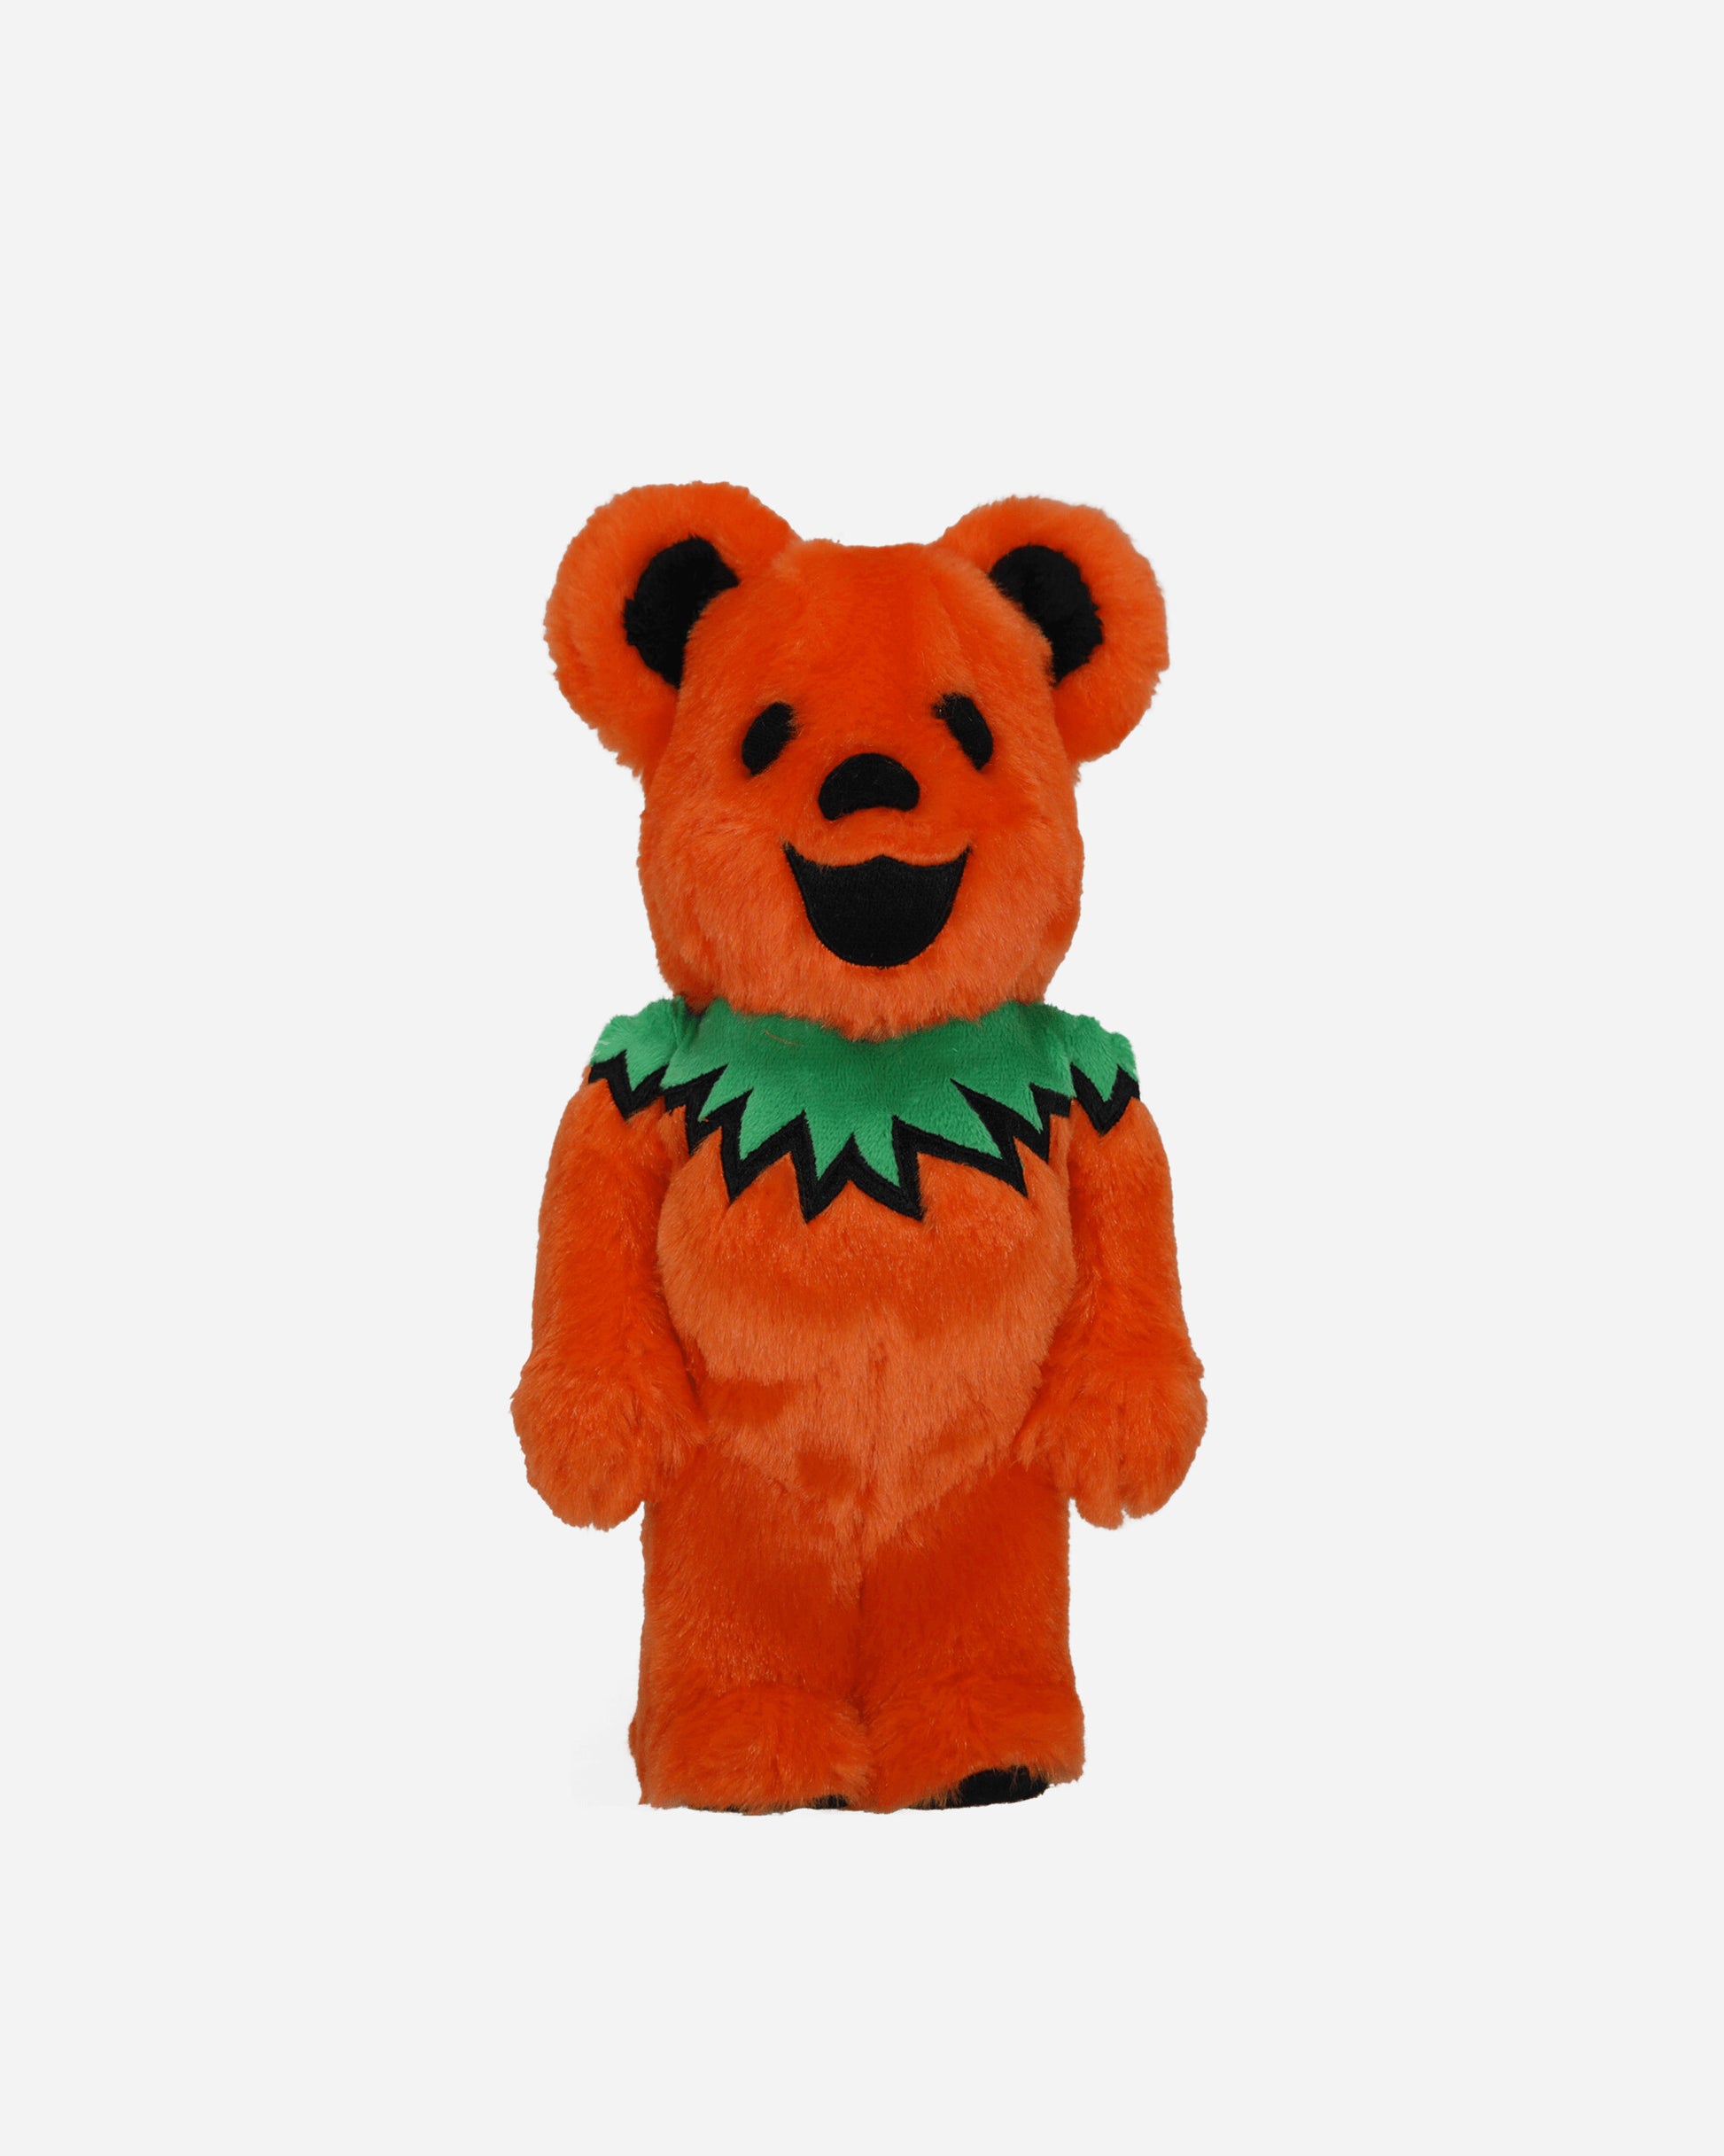 Medicom 400% Grateful Dead Dancing Bears Costume Orange Ass Home Decor Toys 400DANCEORANGE ASS